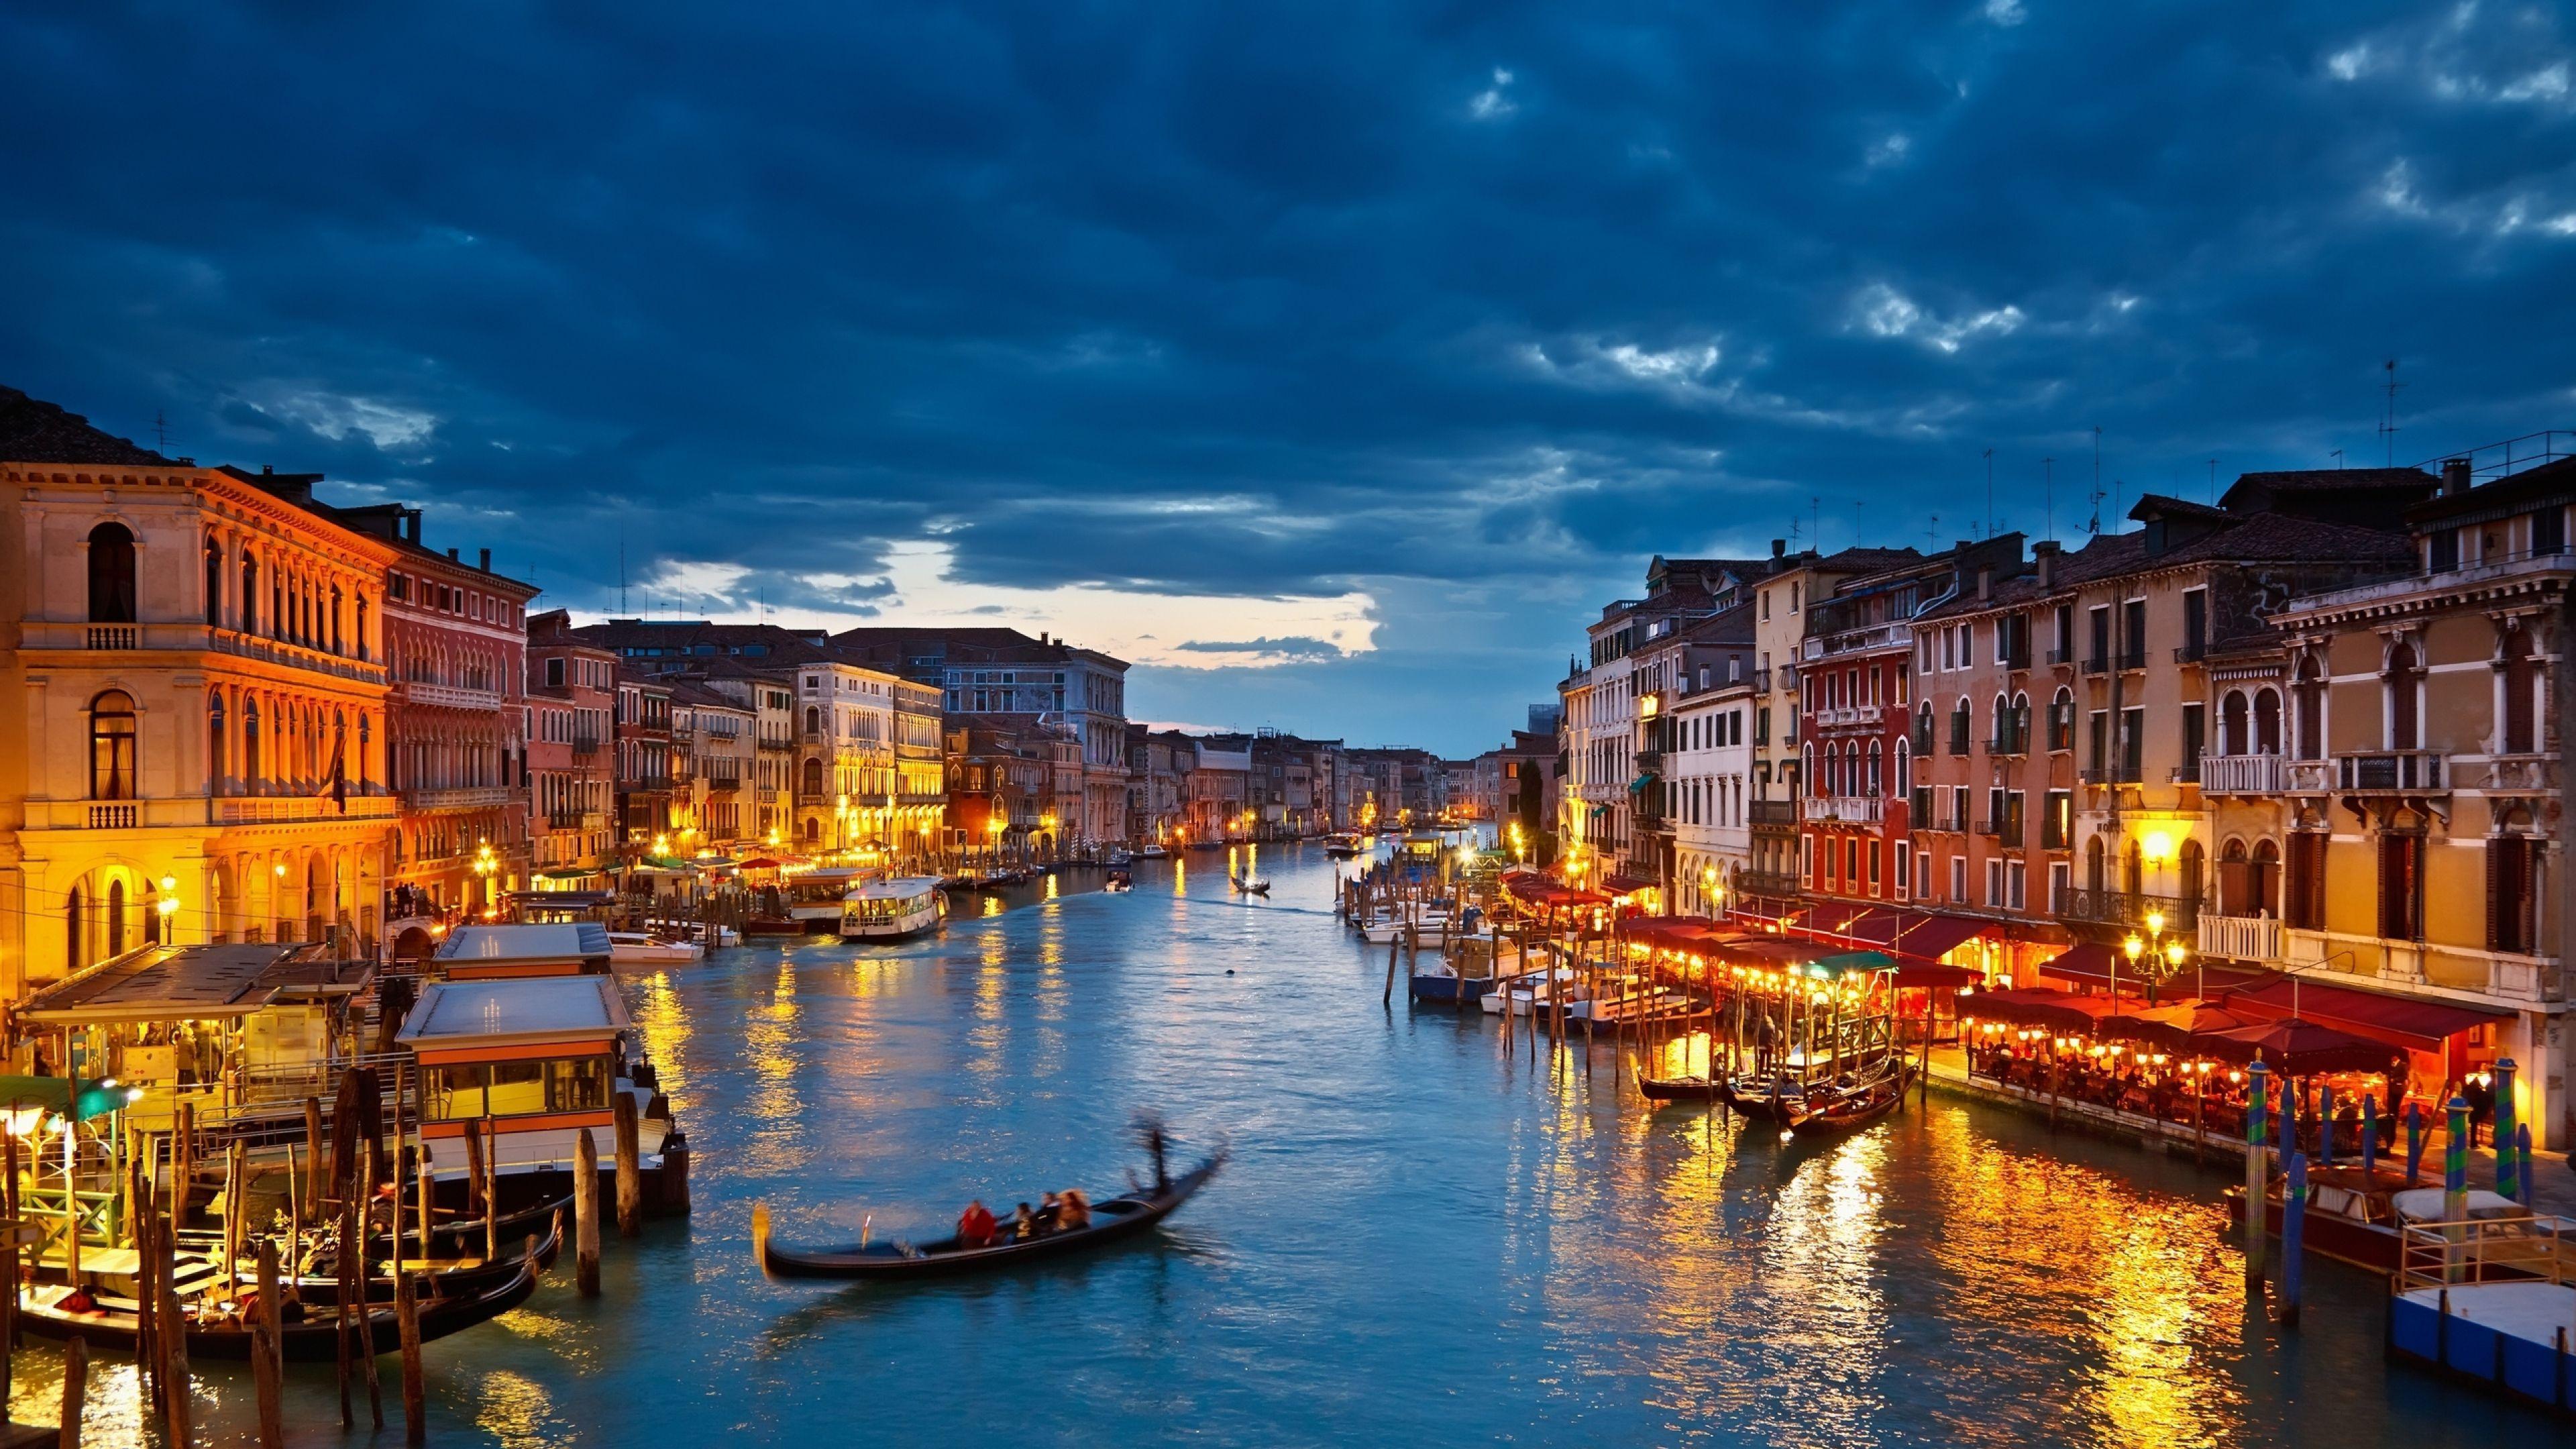 HD Background Venice Italy Night View Gondola Rides River